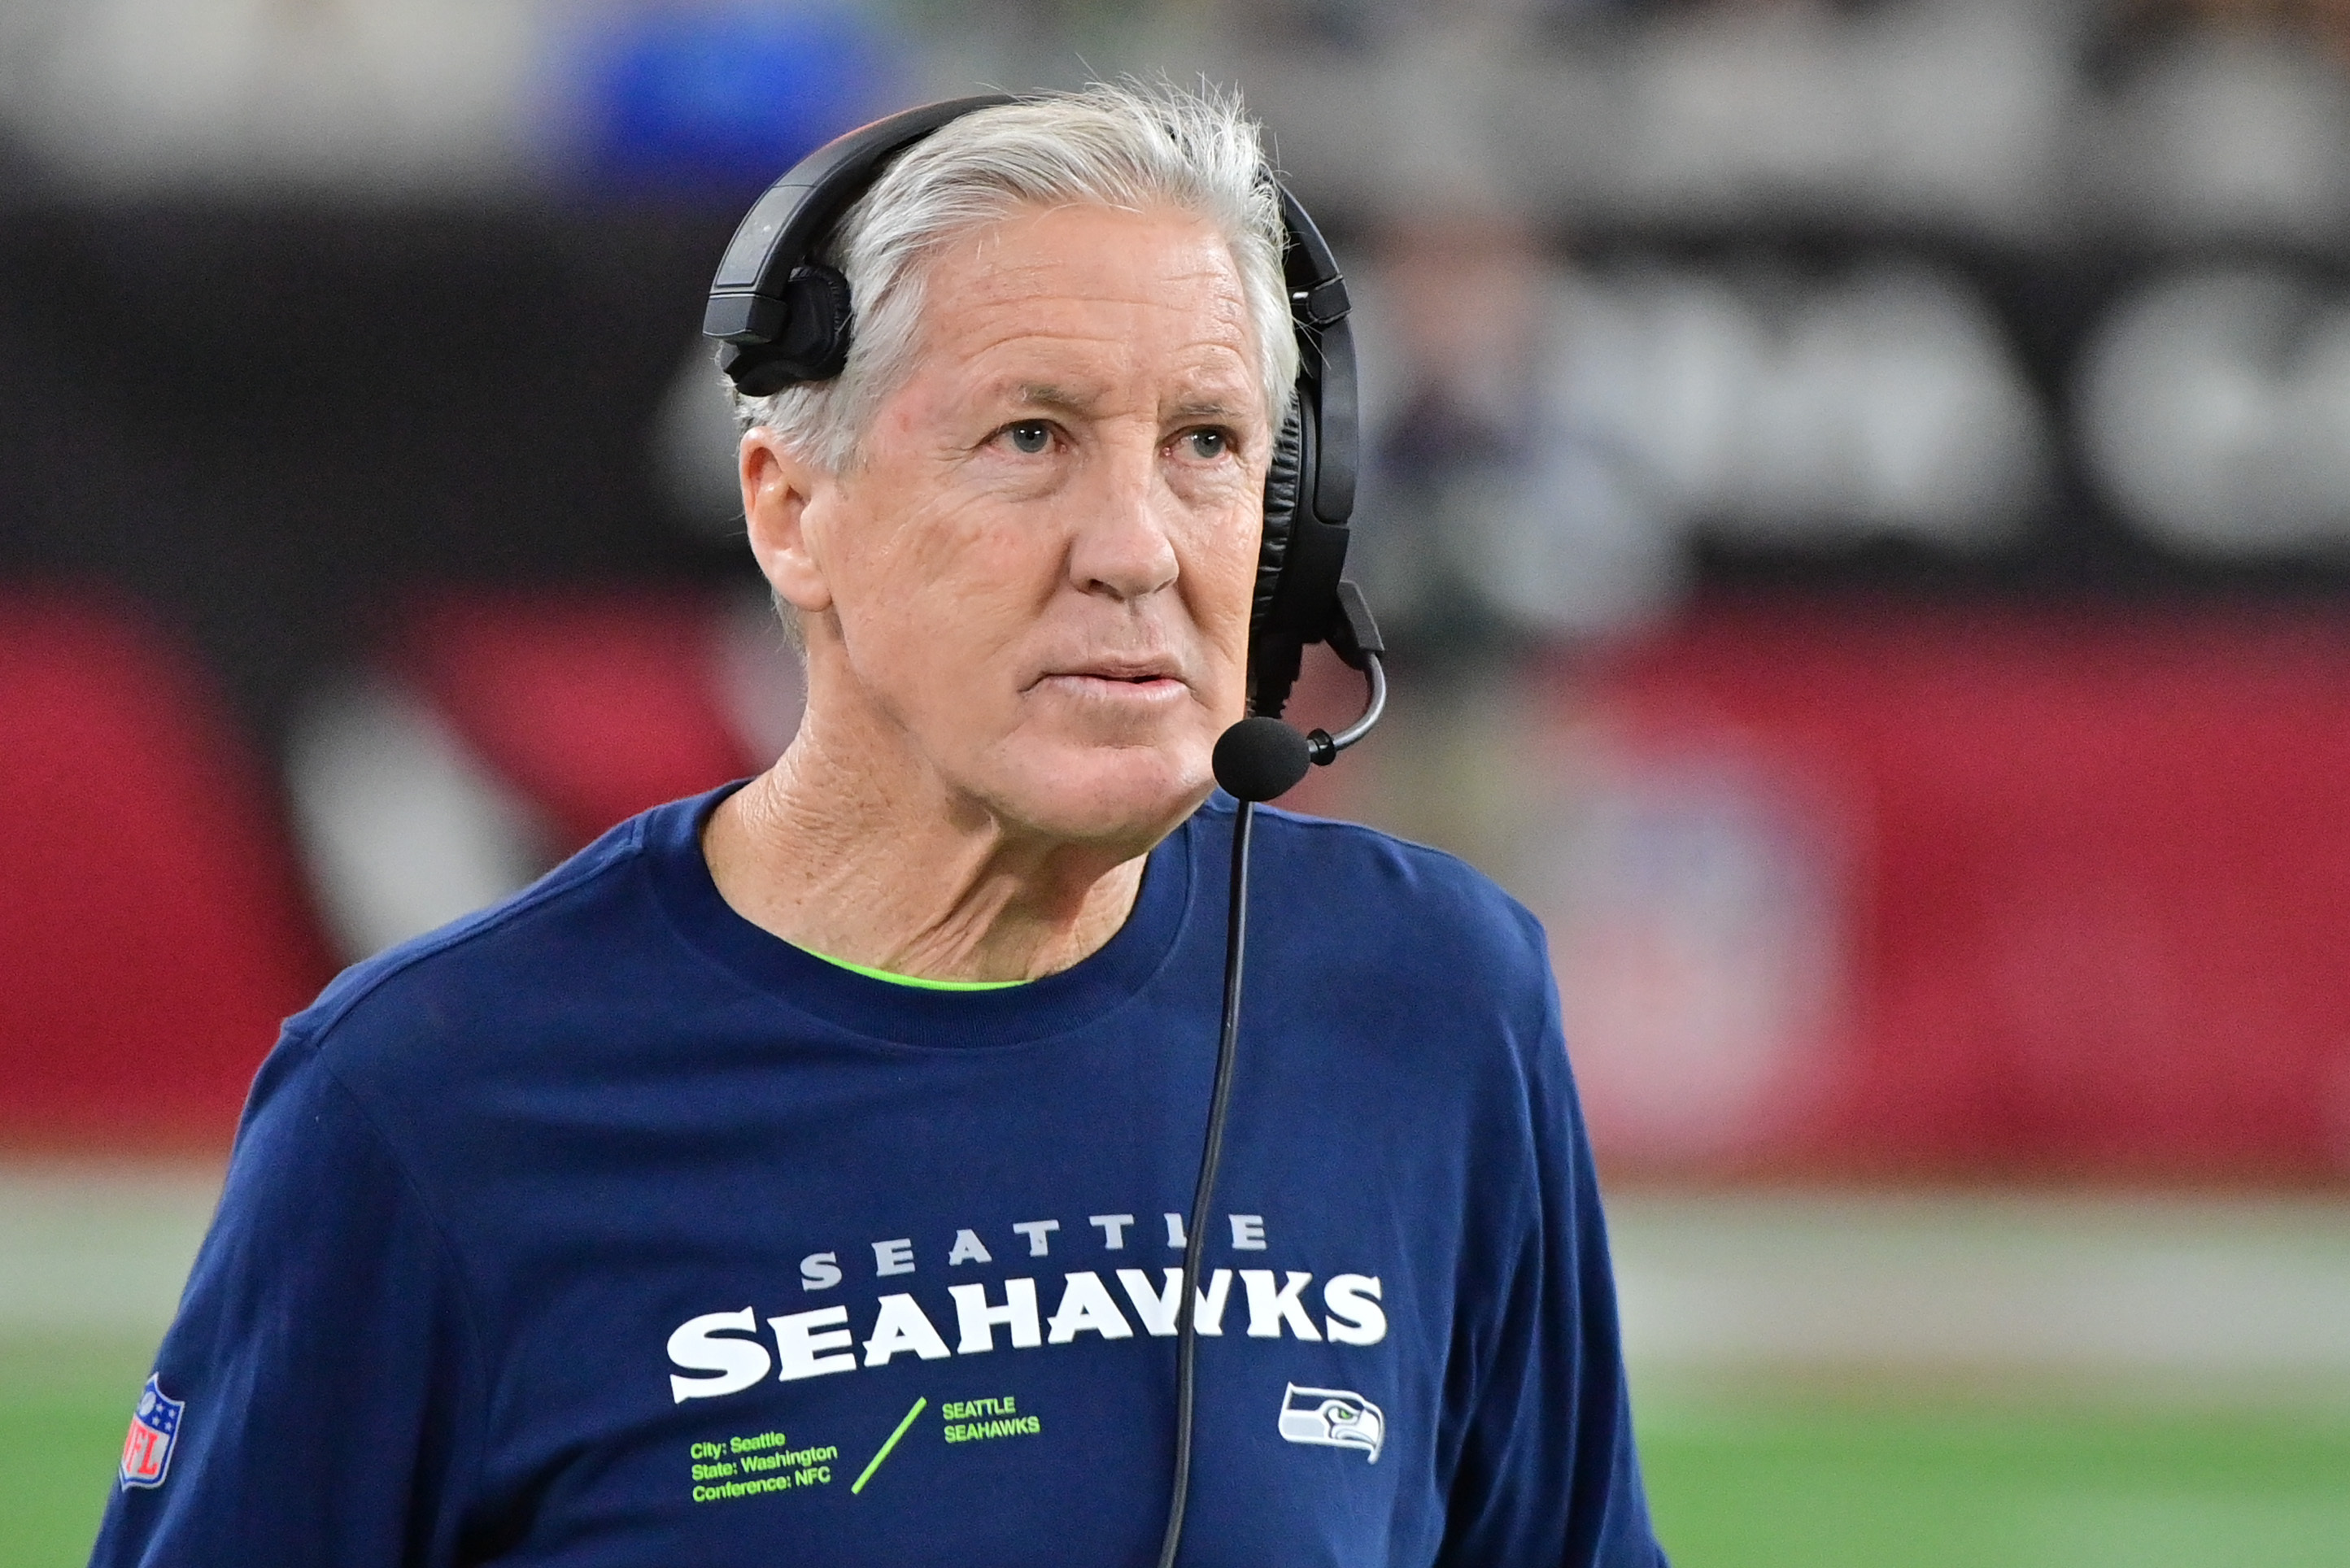 Seahawks coach Pete Carroll dismisses retirement rumors | Reuters